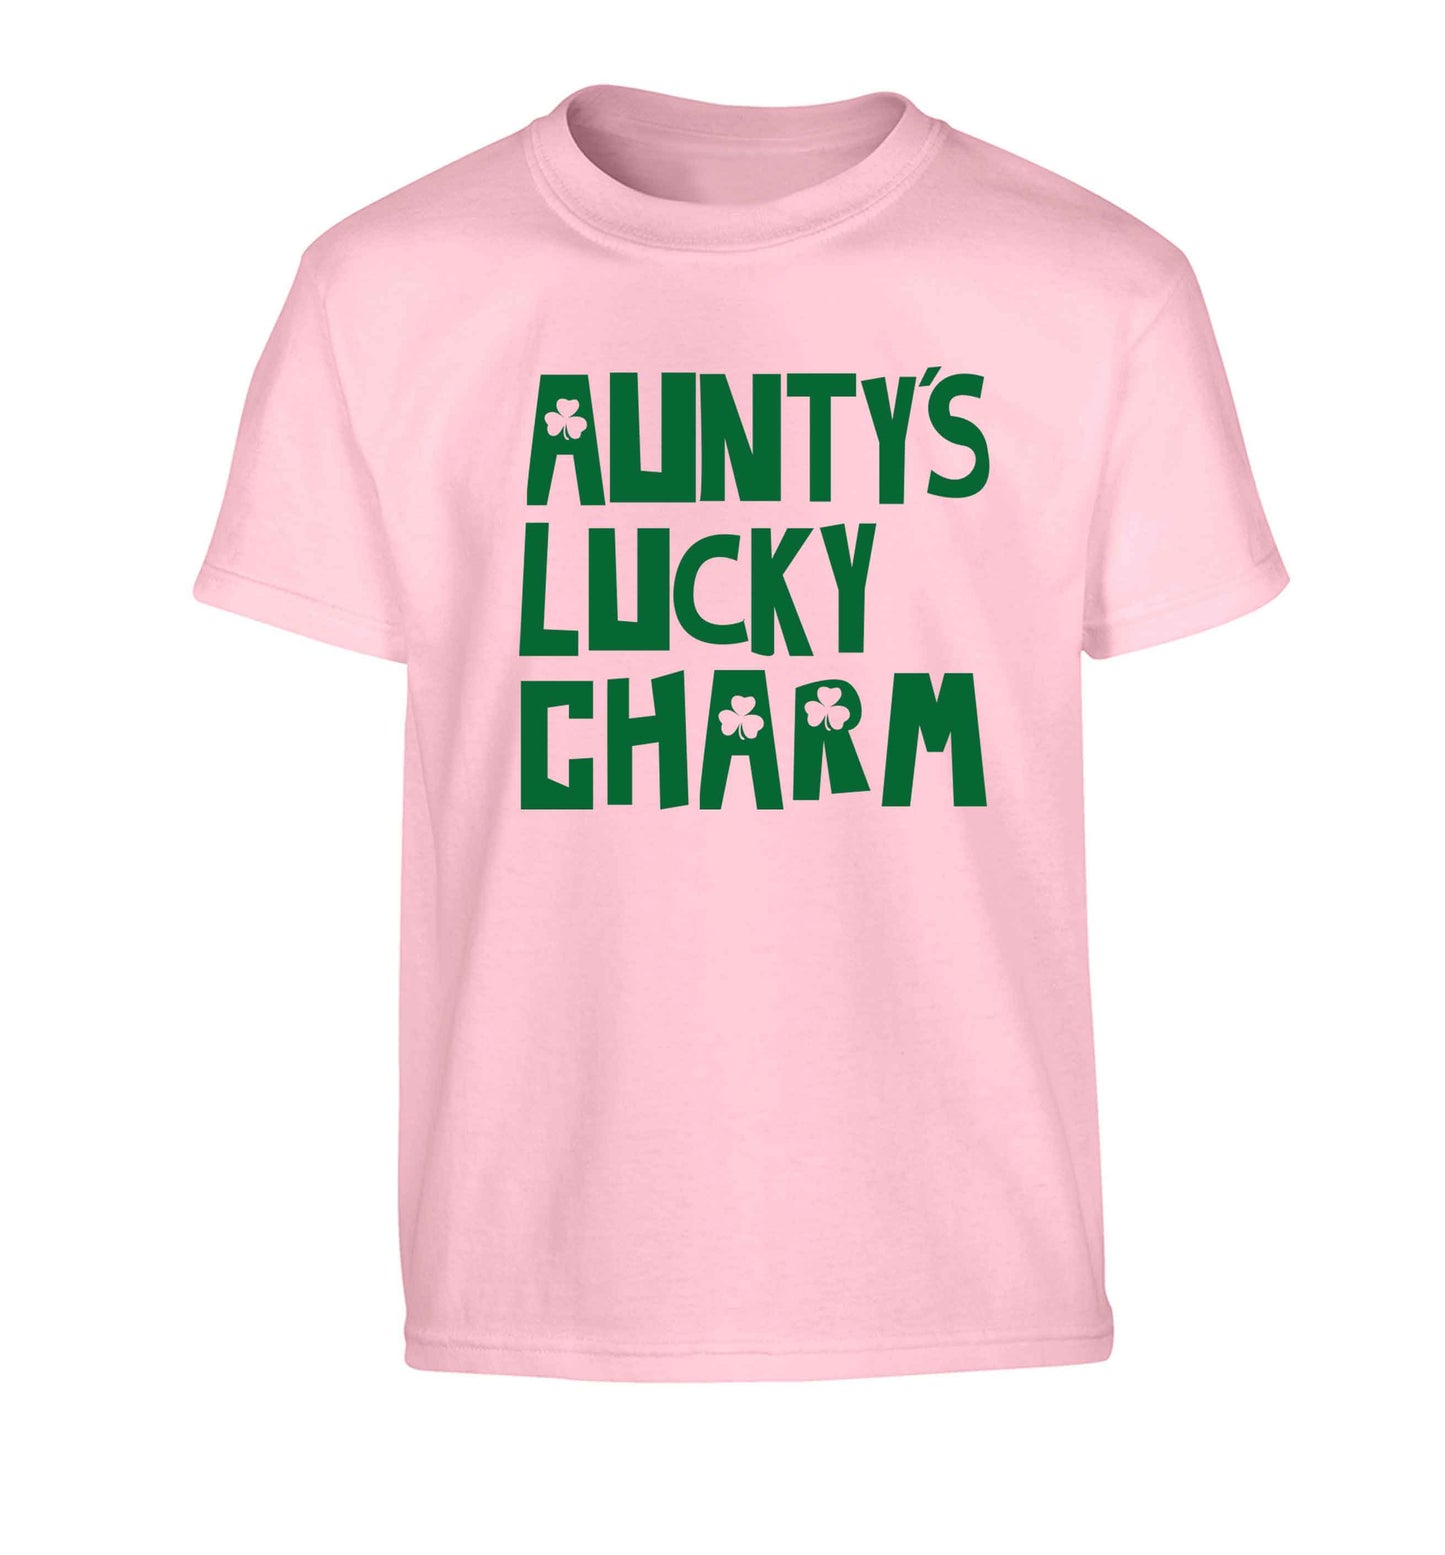 Aunty's lucky charm Children's light pink Tshirt 12-13 Years